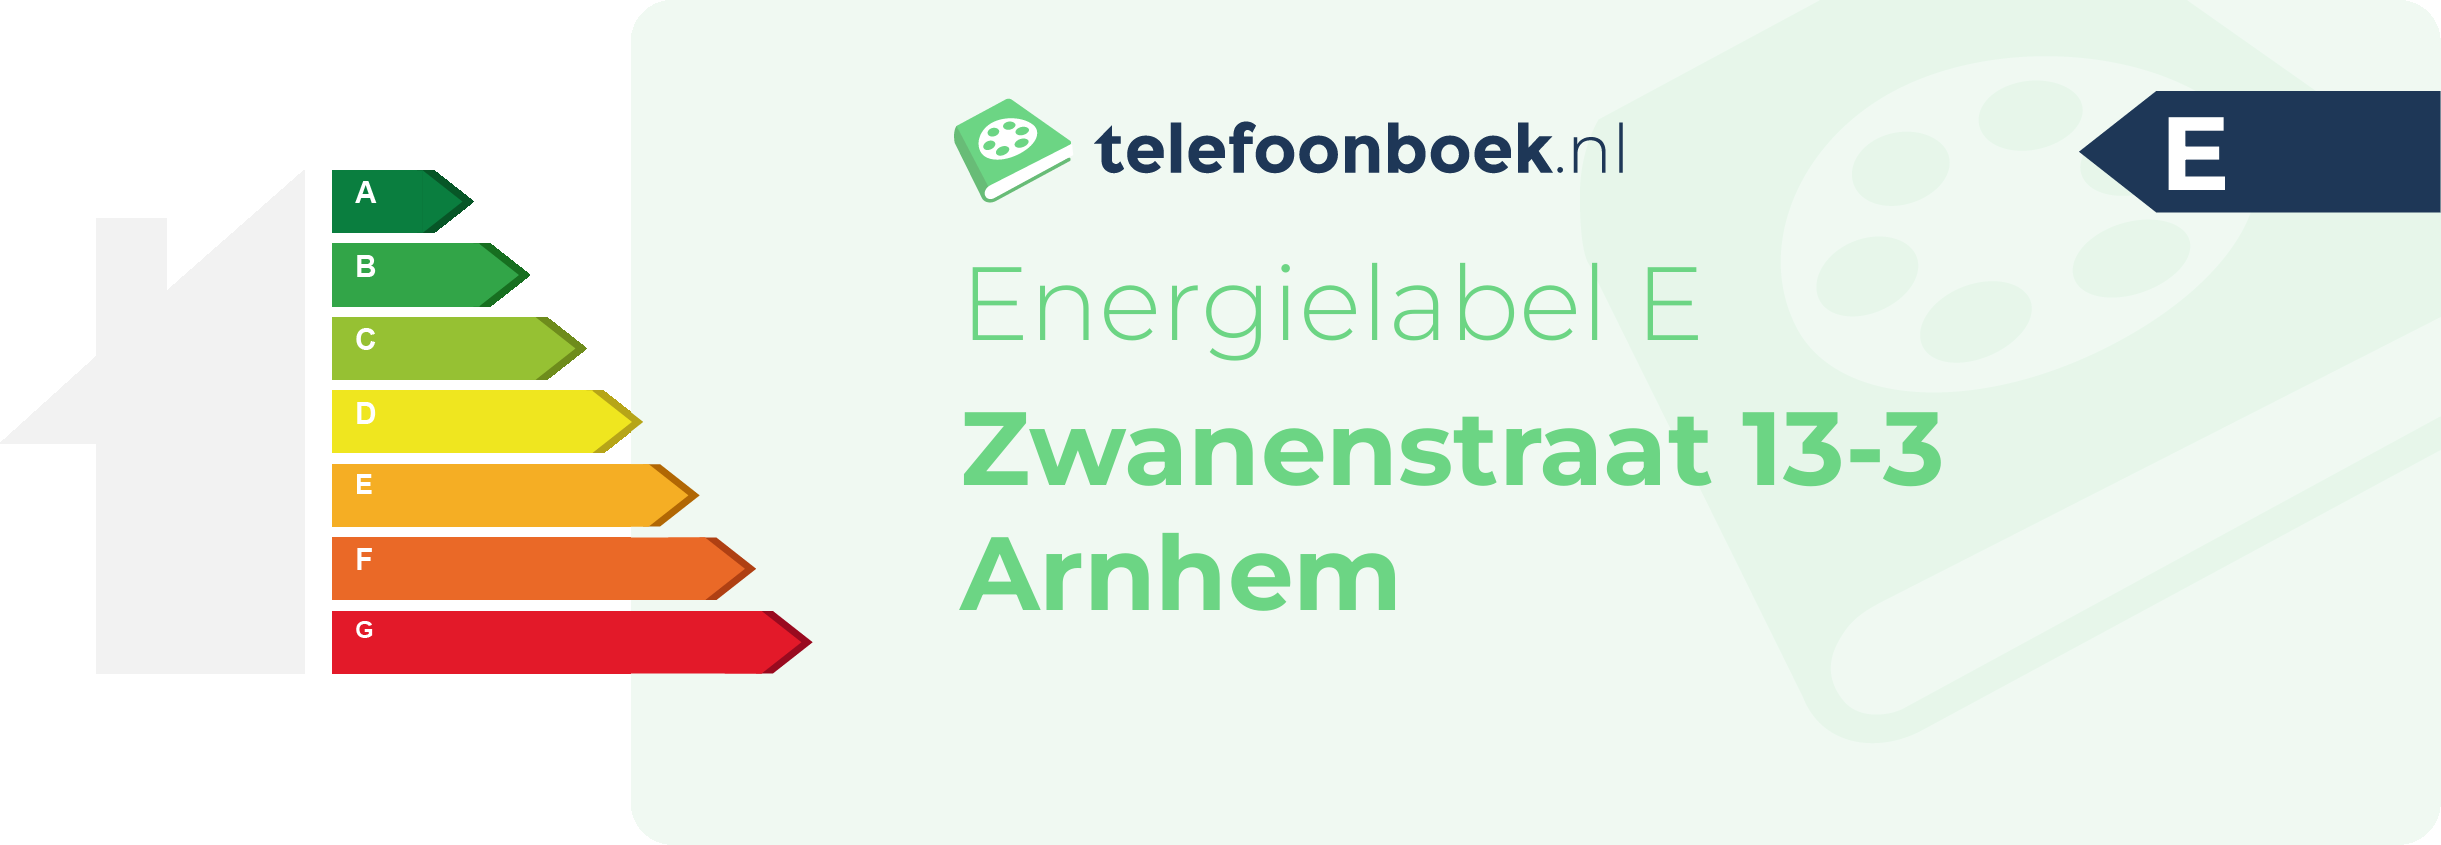 Energielabel Zwanenstraat 13-3 Arnhem